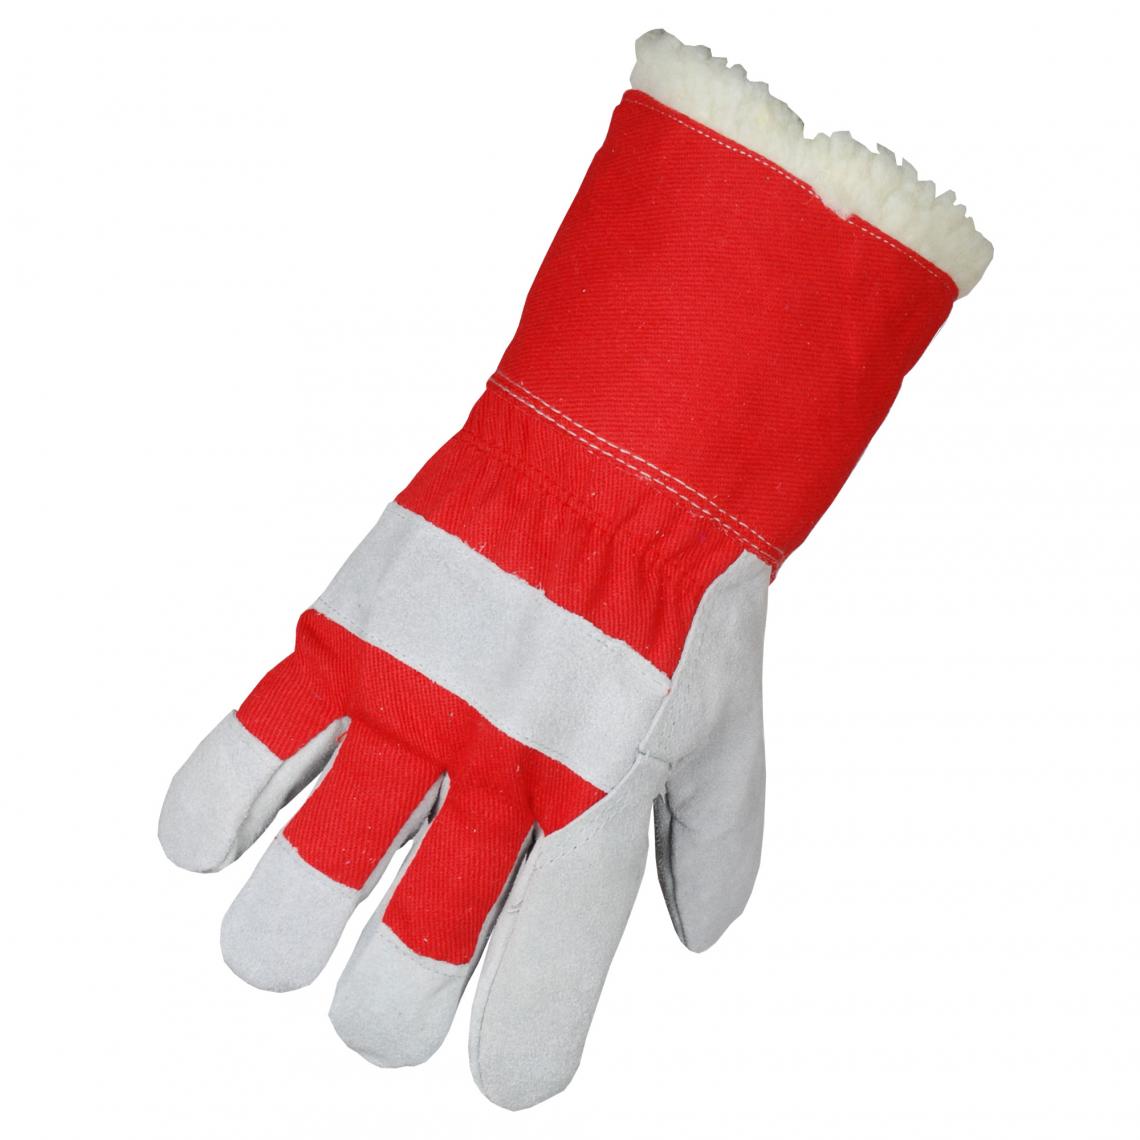 L Horizon leather work gloves